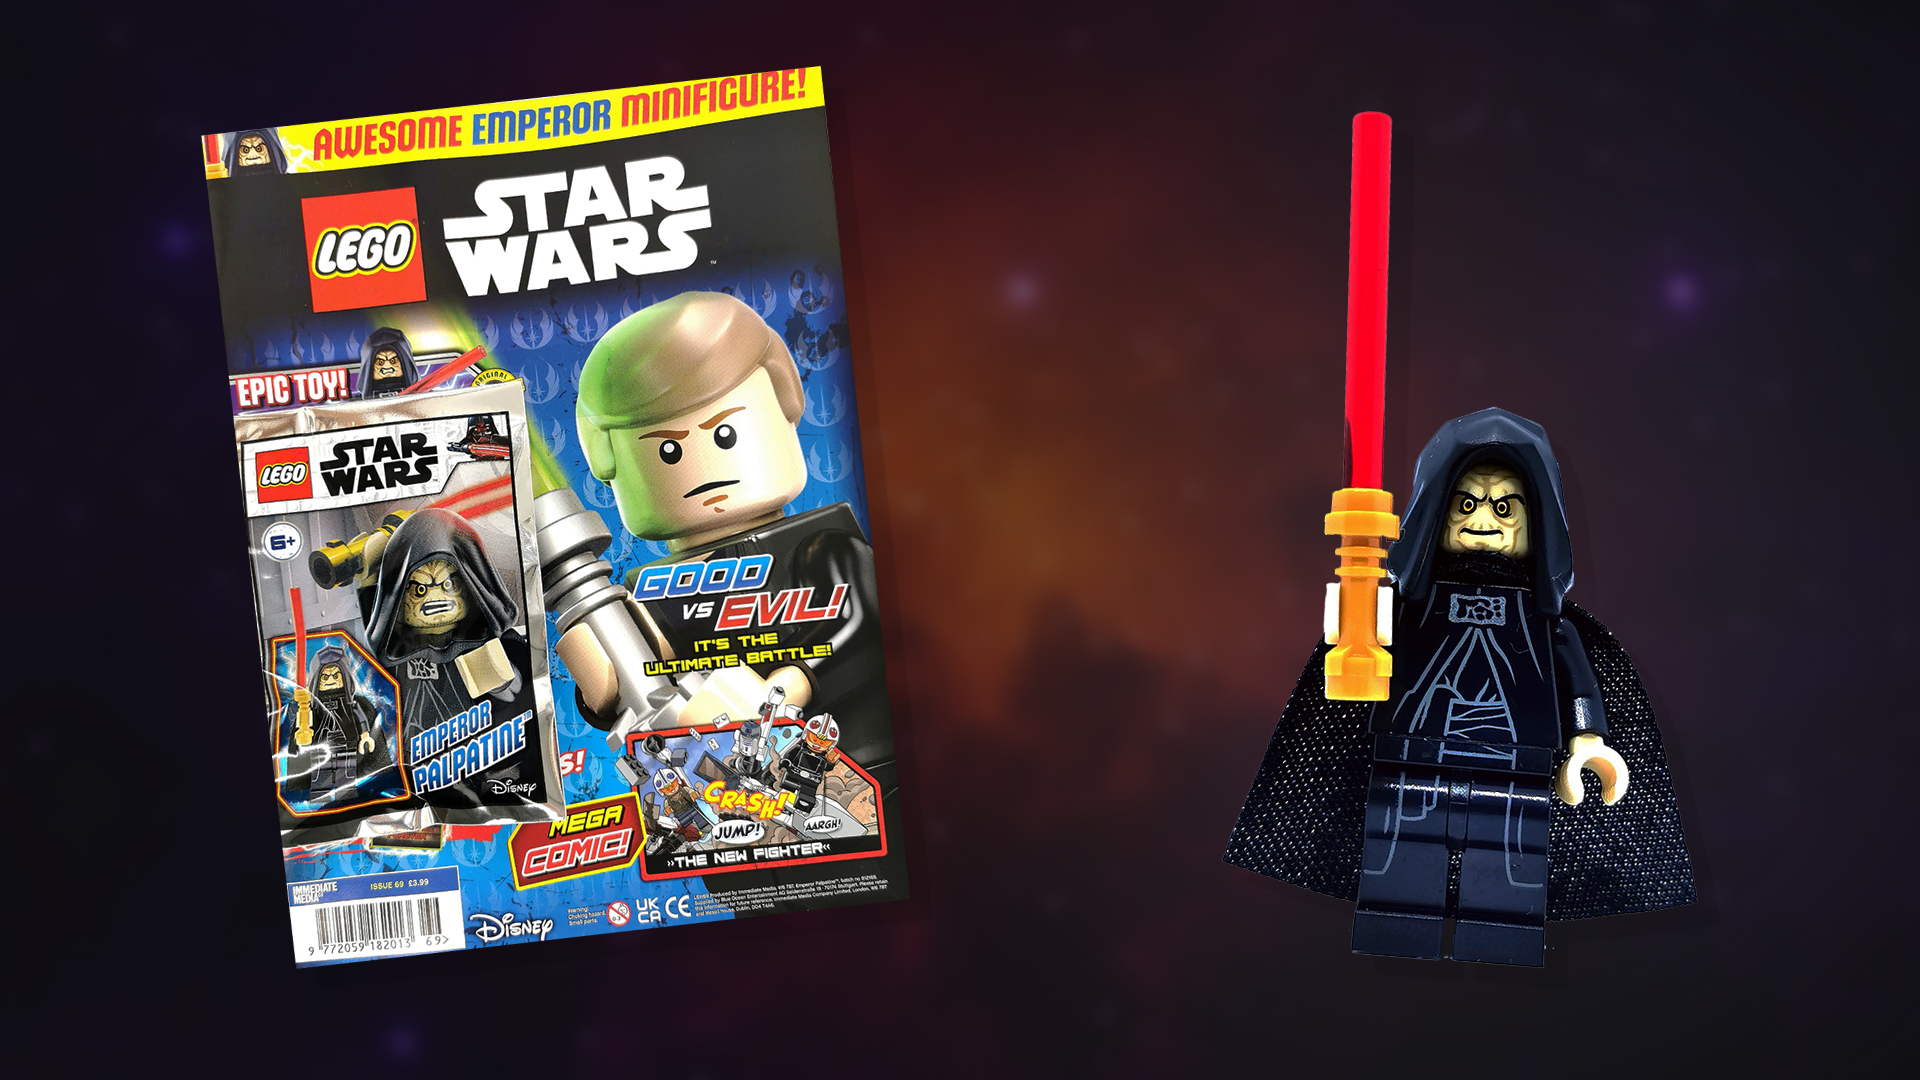 LEGO Star Wars Magazine//Comic with Emperor Palpatine Minifigure Issue 69